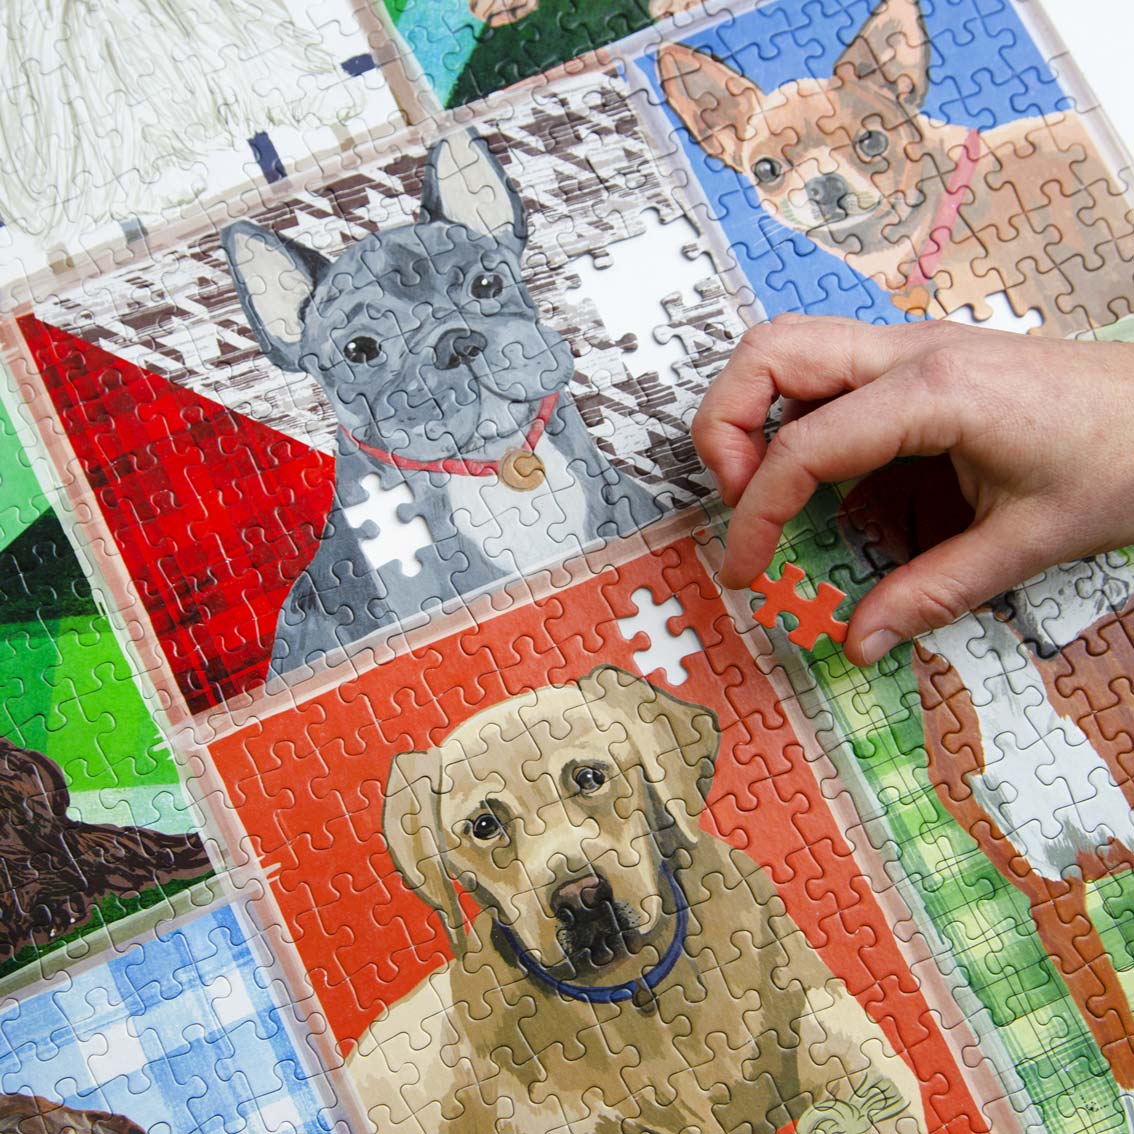 Dog Puzzle 1000 piece